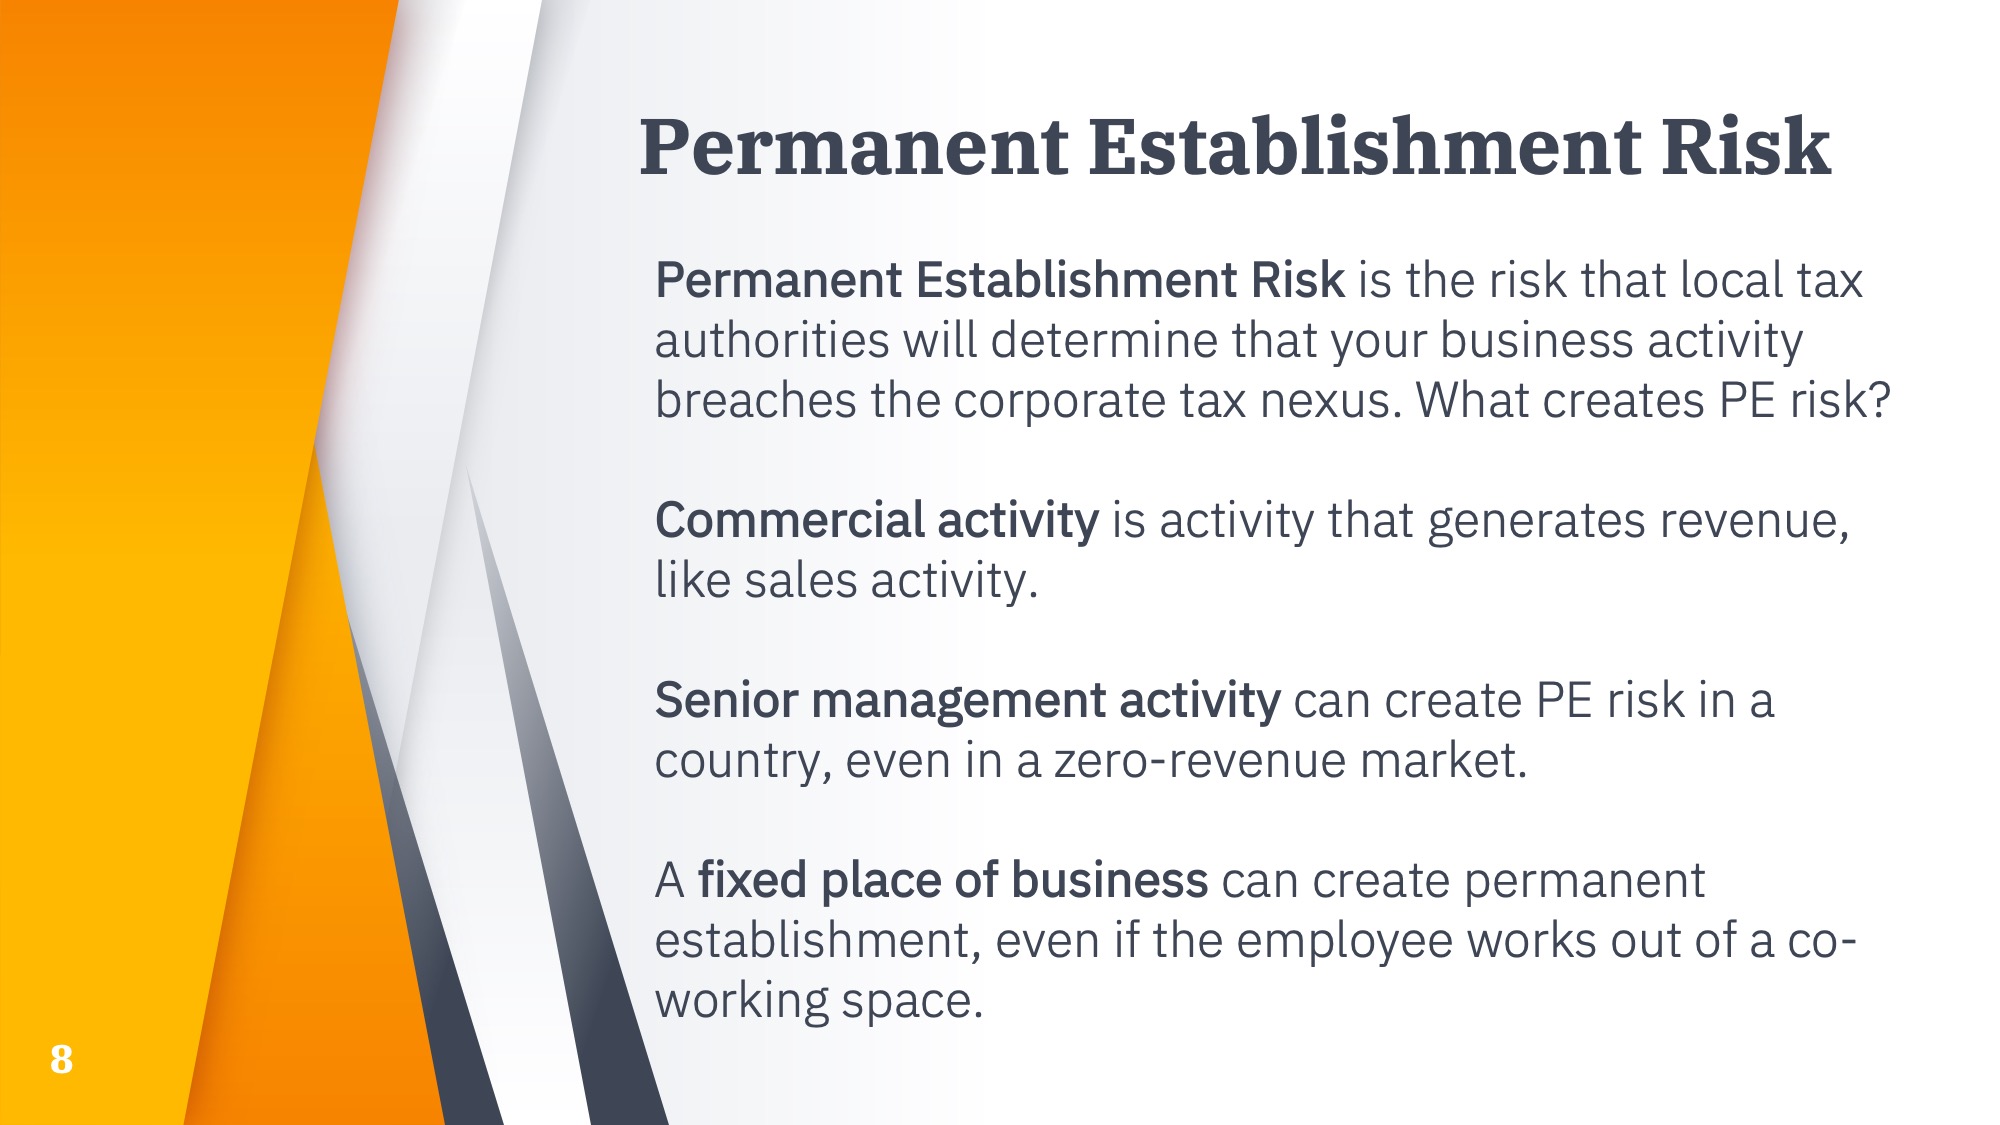 Permanent establishment risk explained